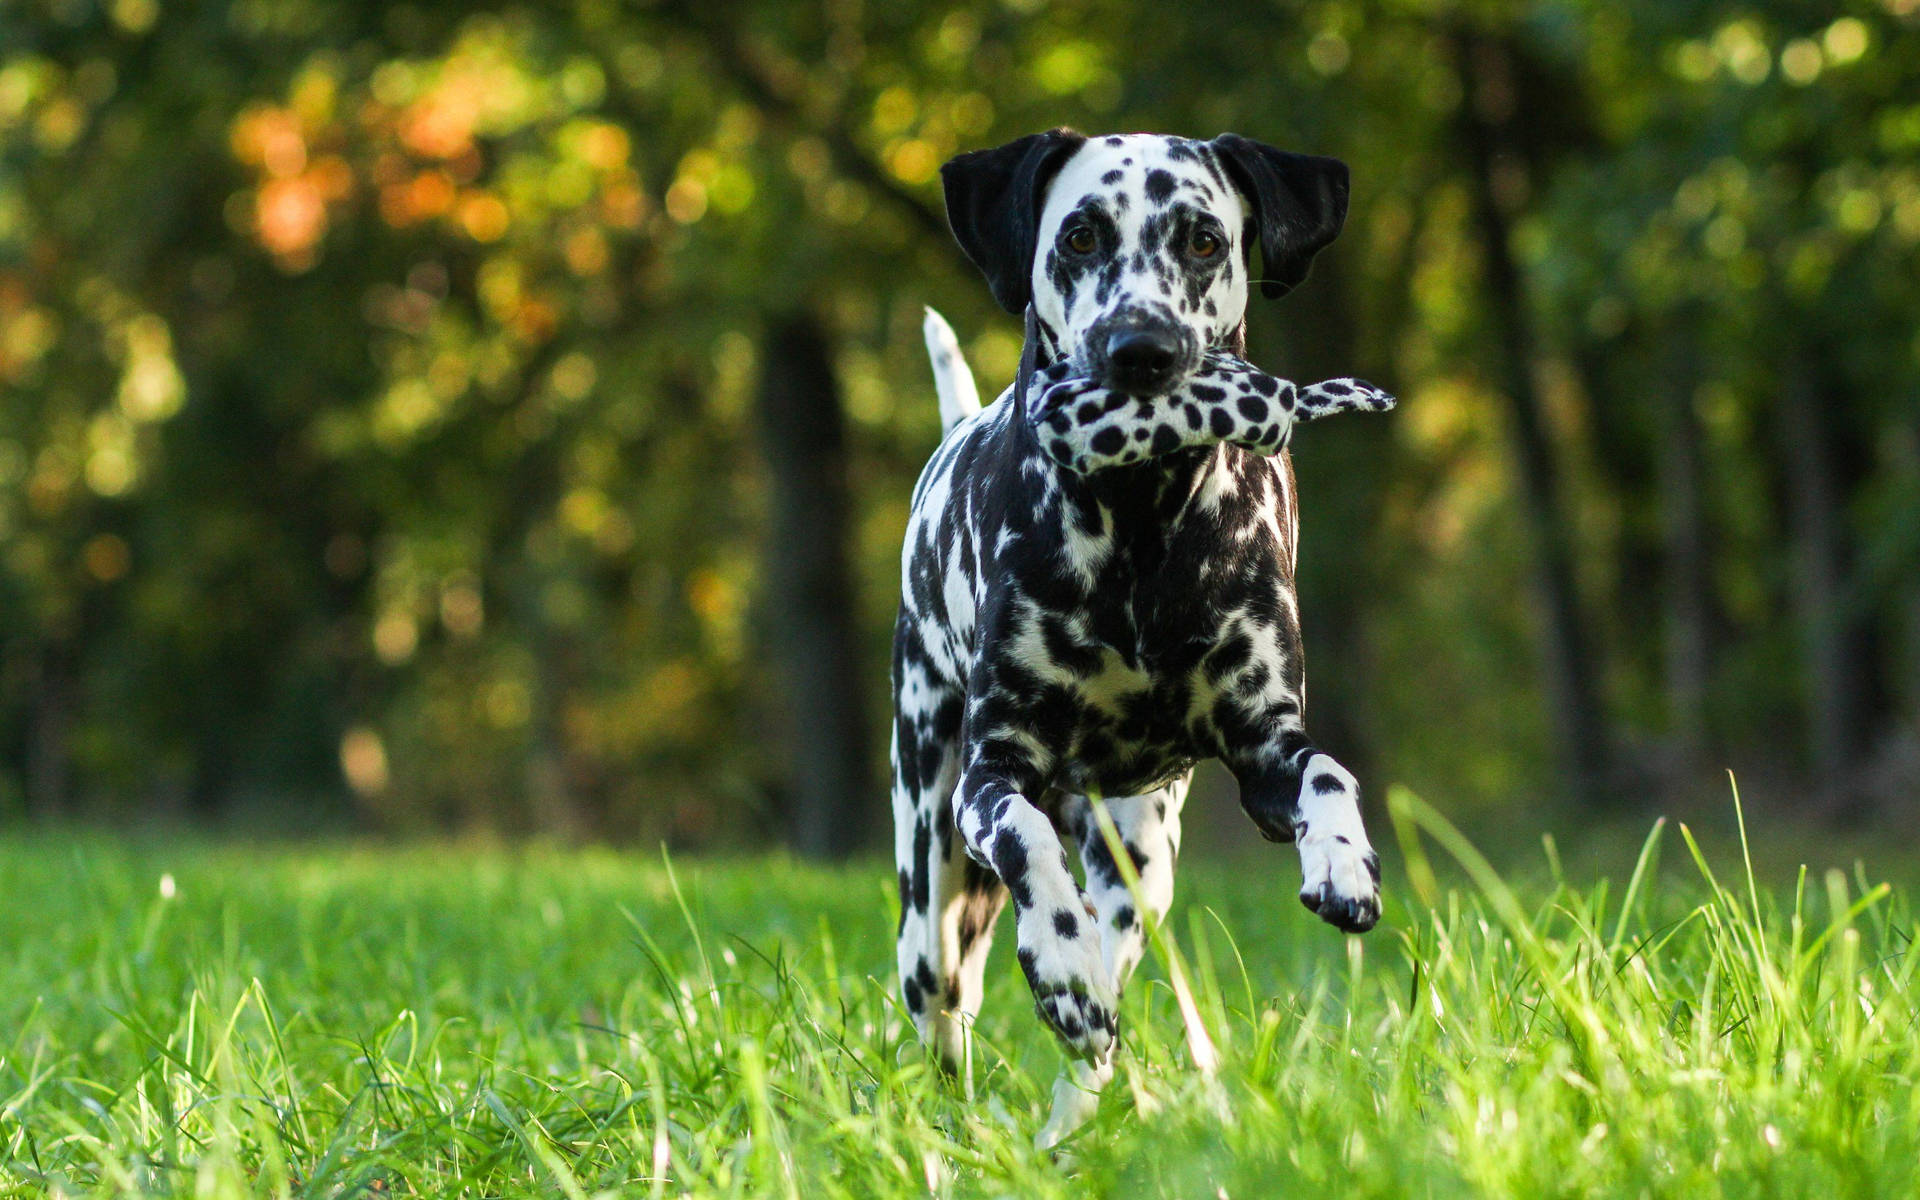 Dalmatian Dog Running On Grass